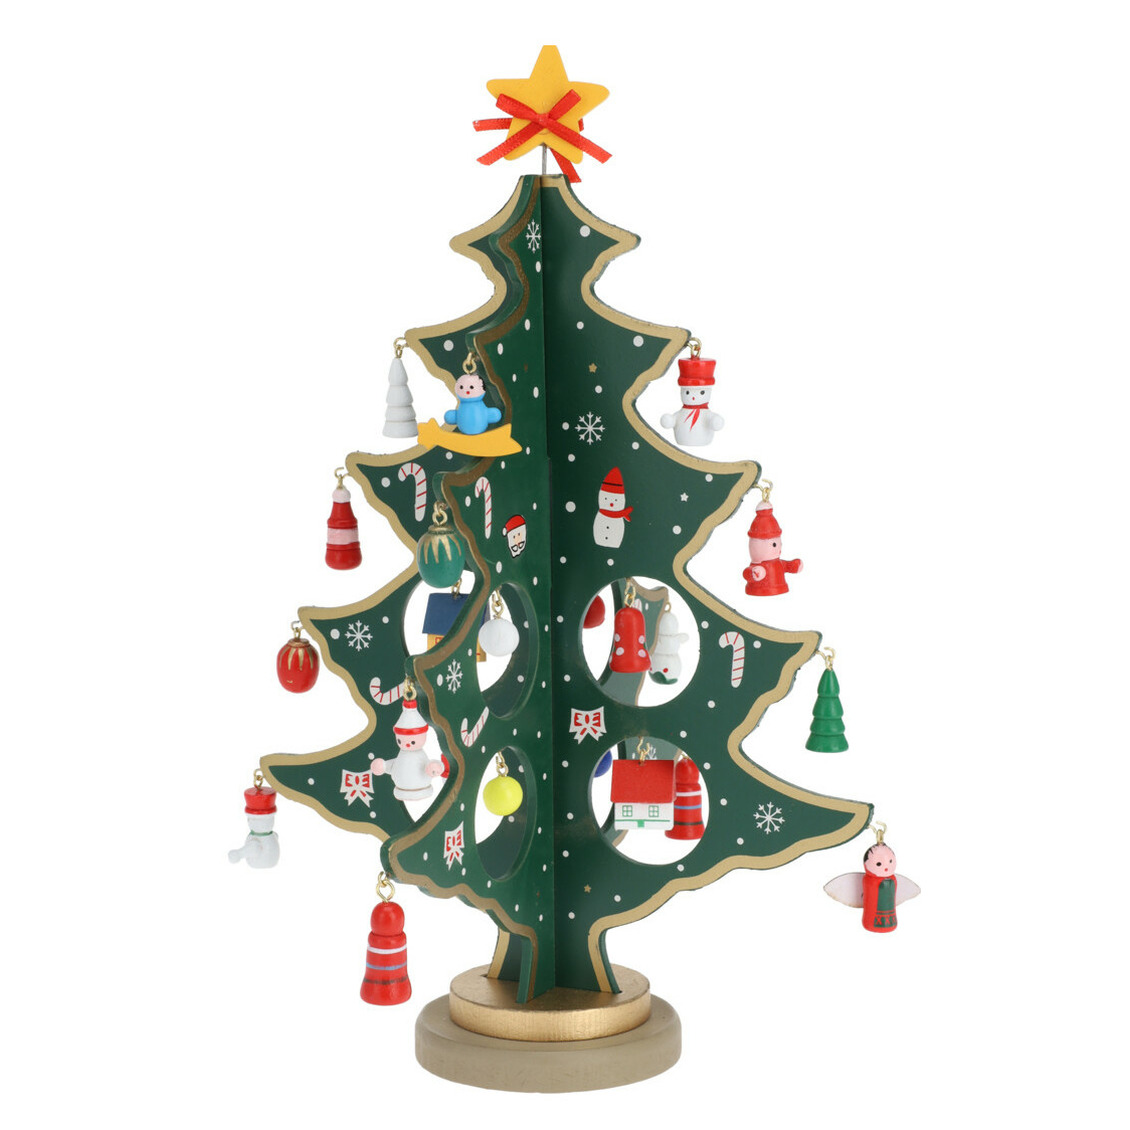 Klein decoratie kerstboompje hout groen H26 cm kinderkamer